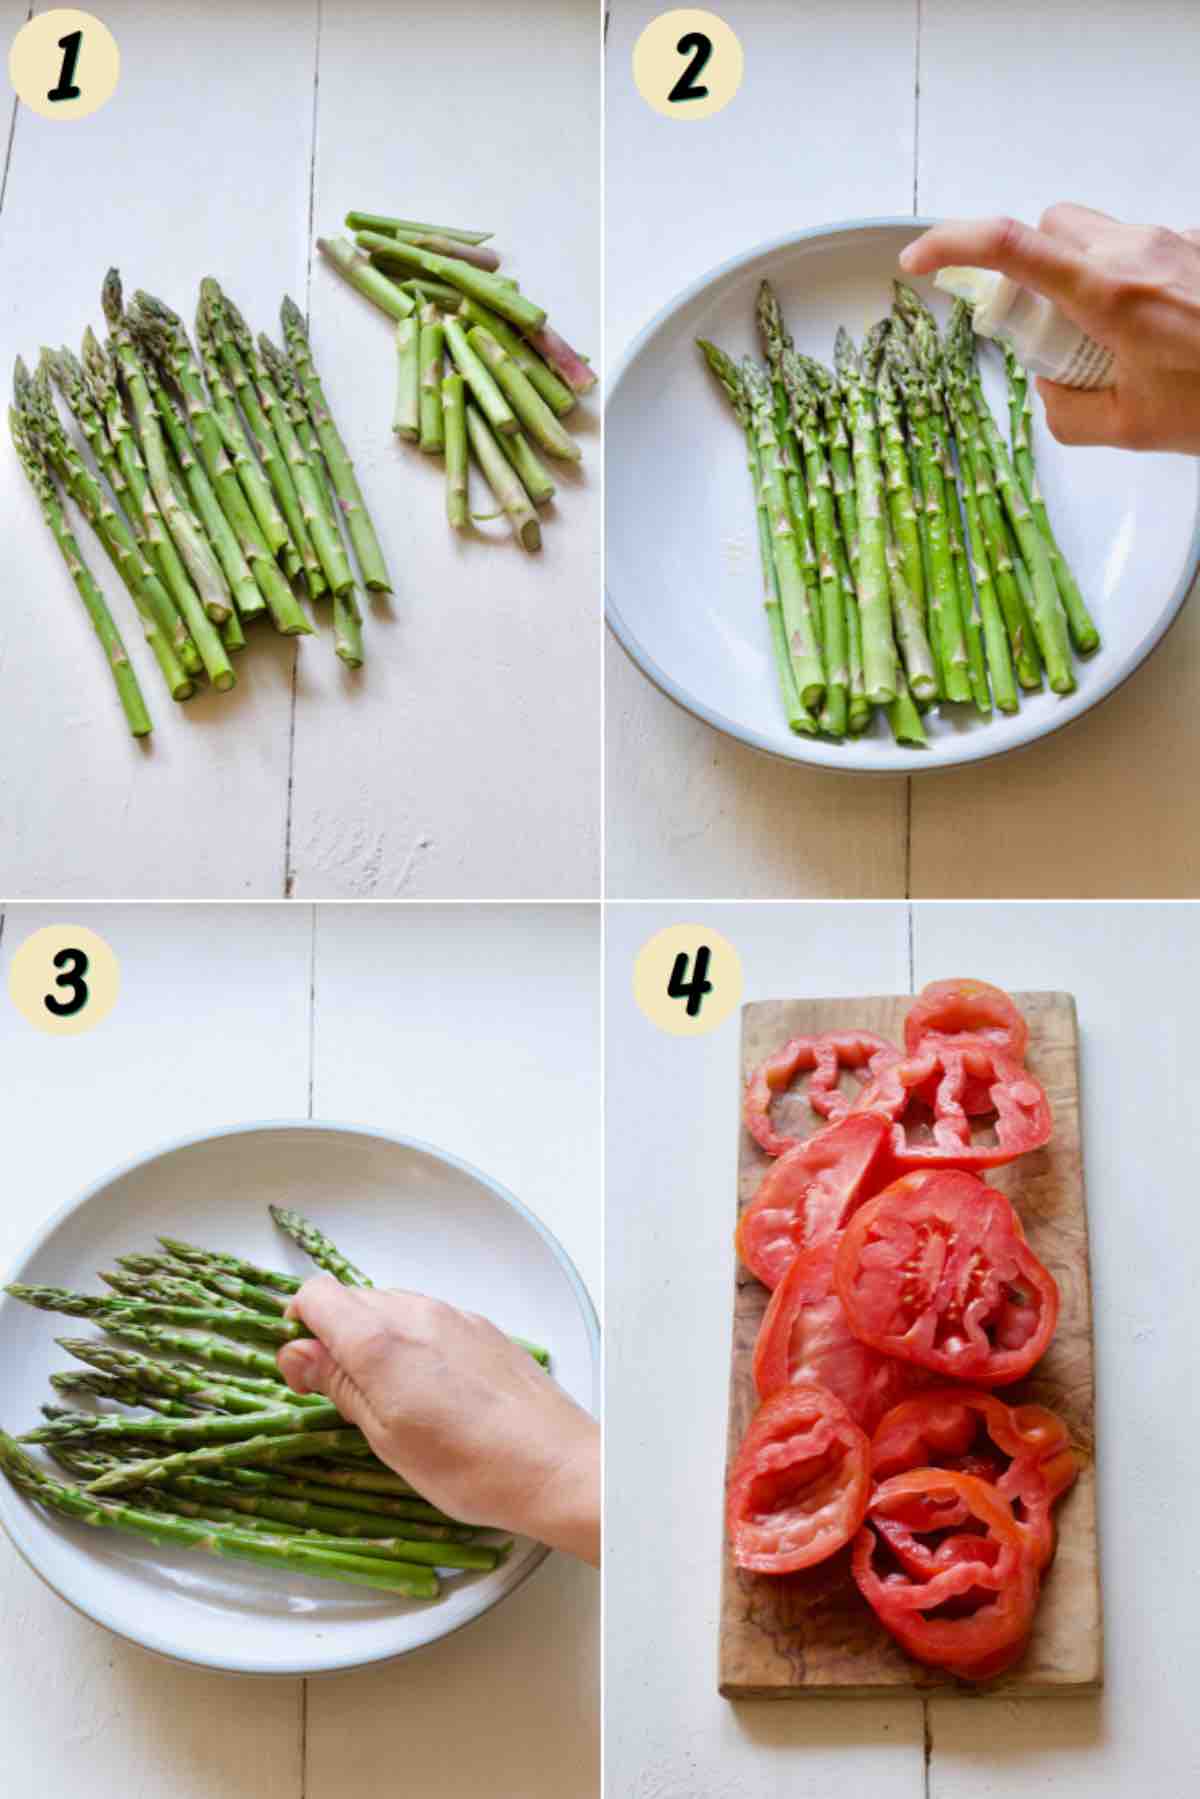 Preparing asparagus and tomatoes.